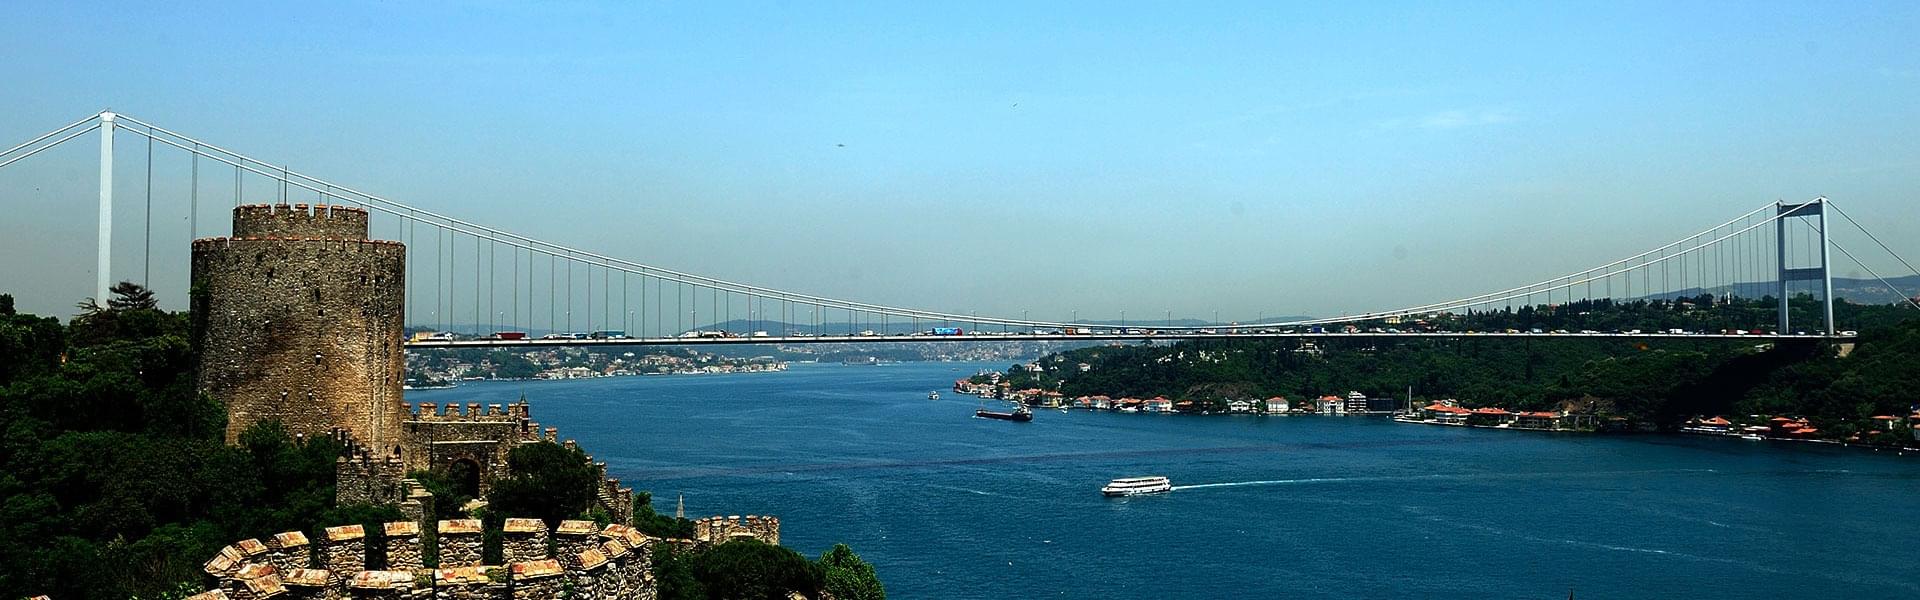 Bosphorus River Overview